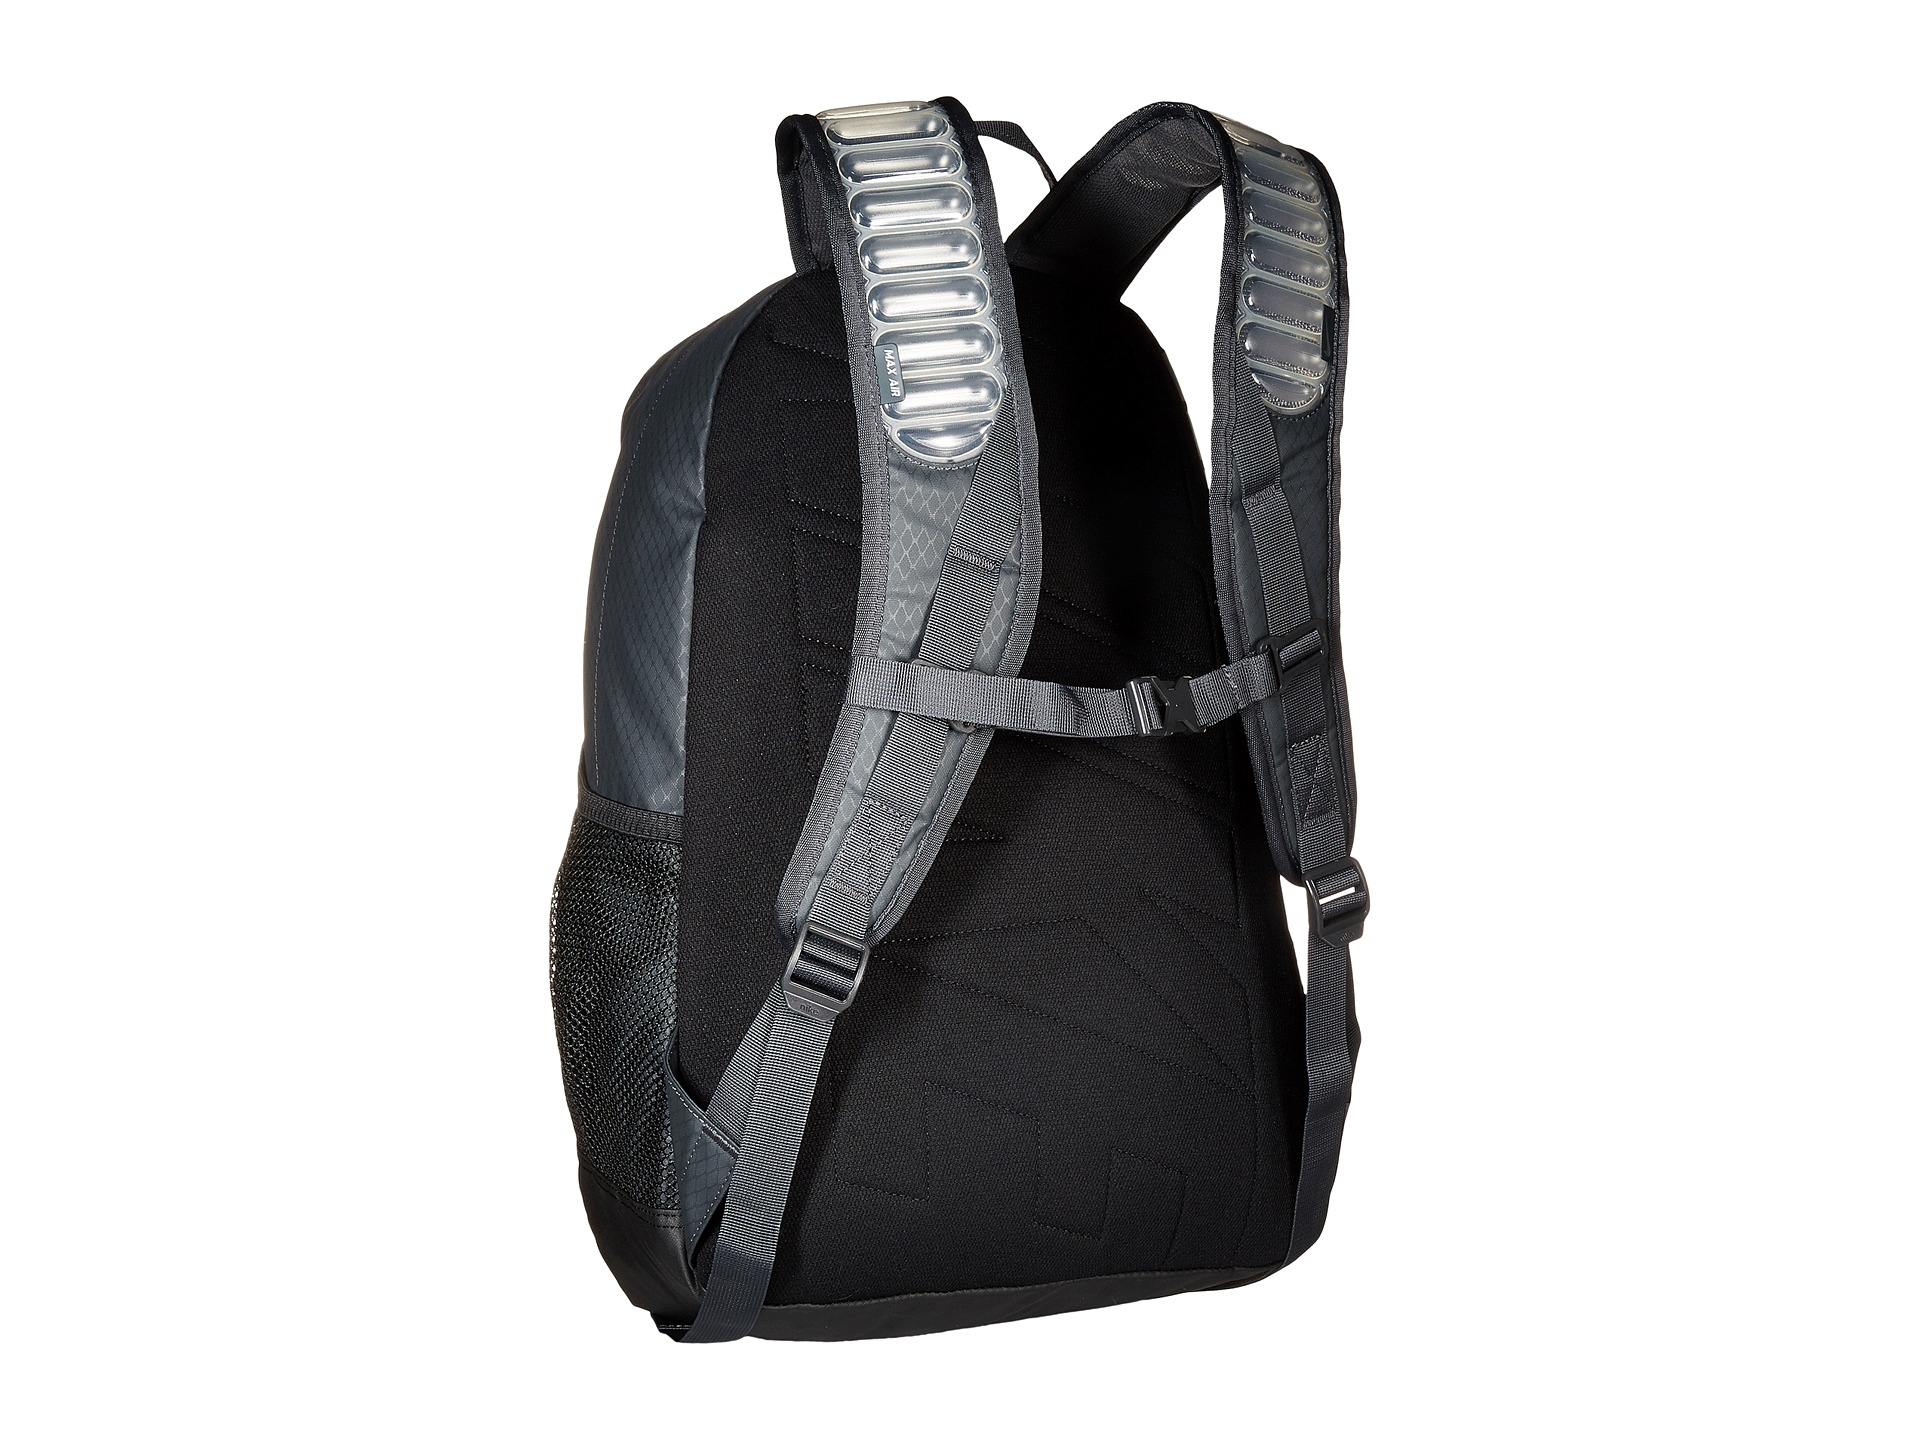 nike max air vapor metallic backpack